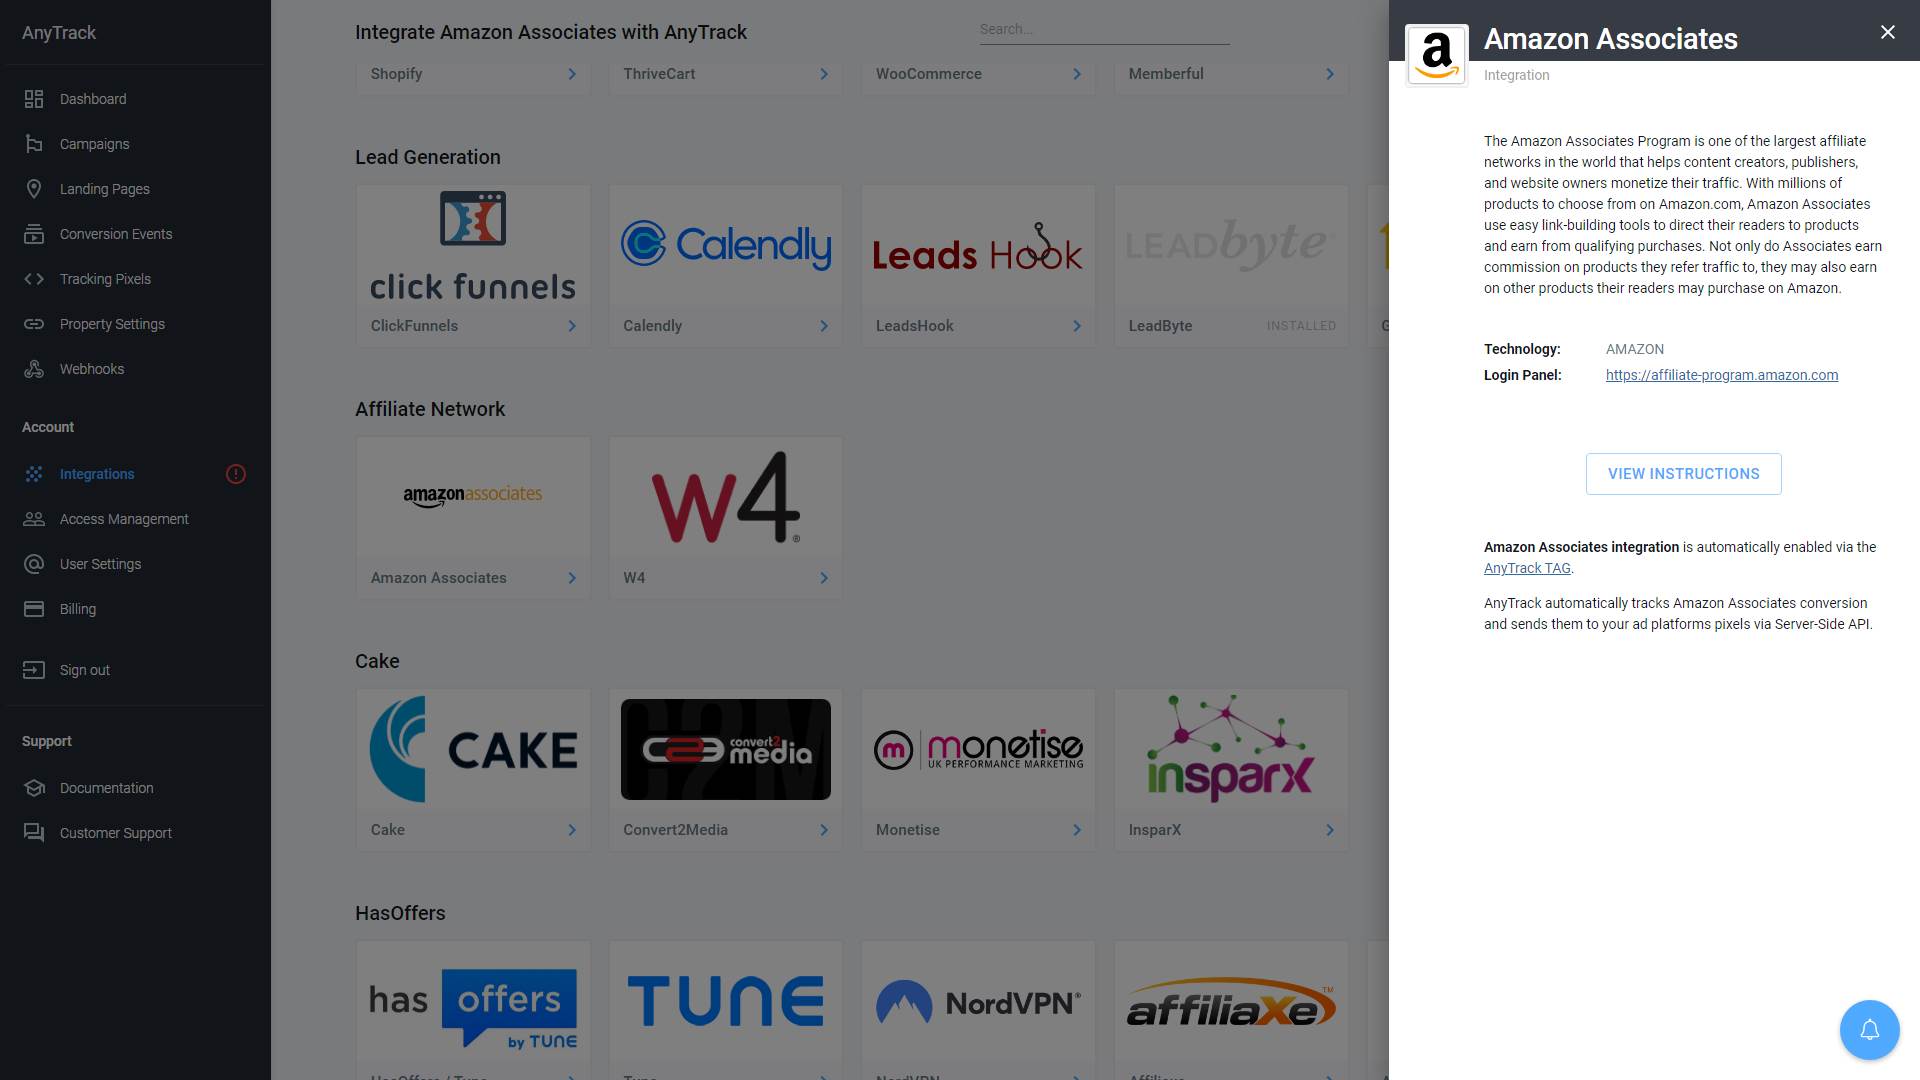 Amazon Associates Integration Page